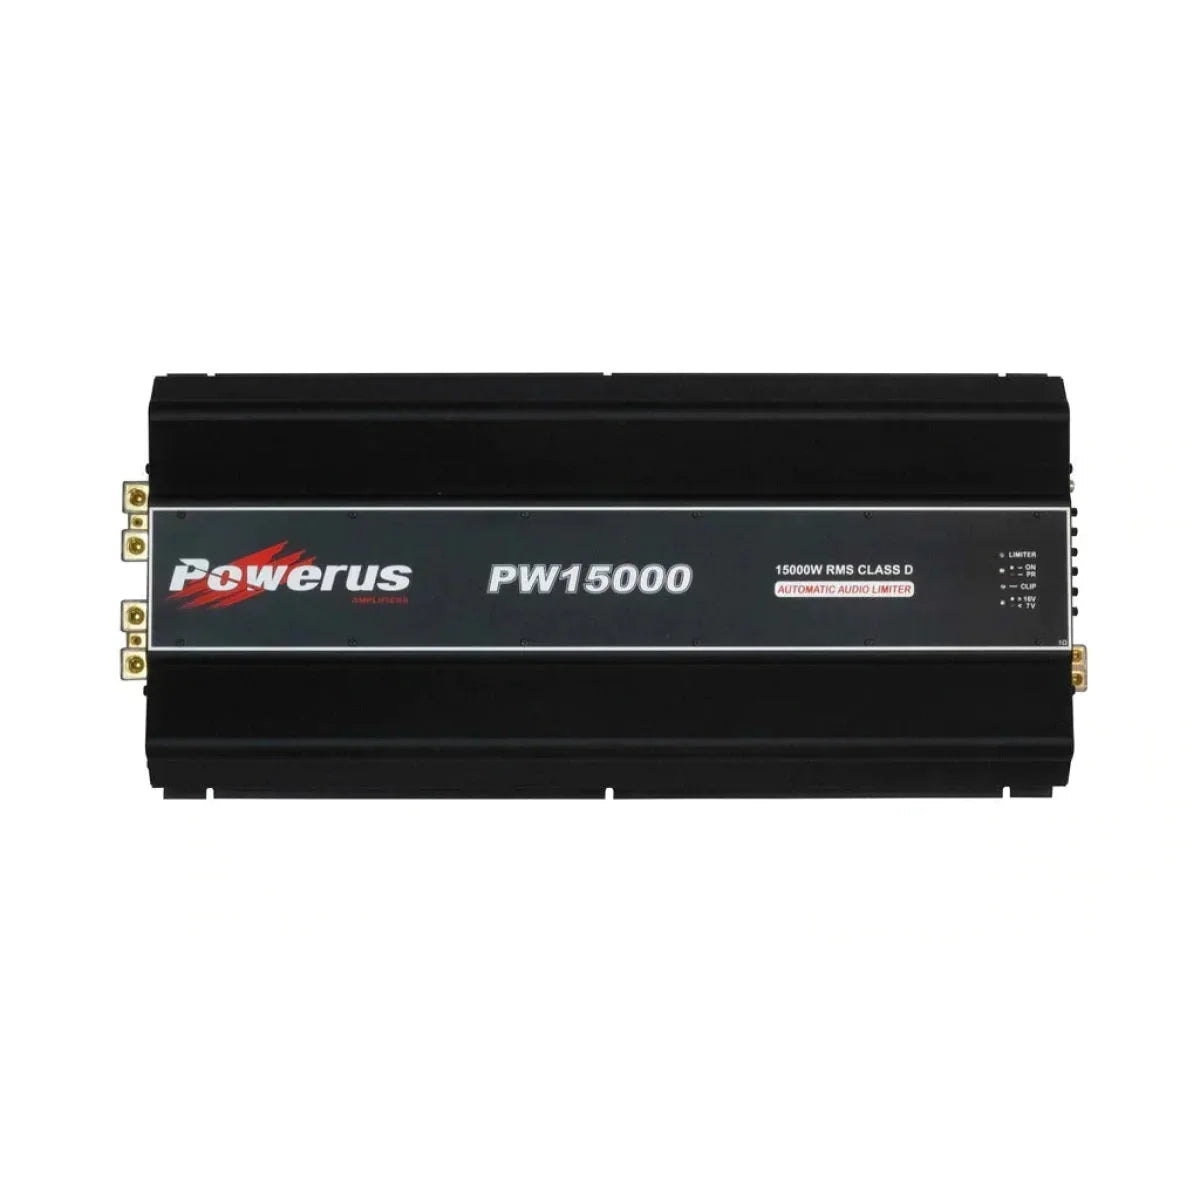 POWERUS Powerus PW150001-Kanal Verstärker Verstärker 1-Kanal